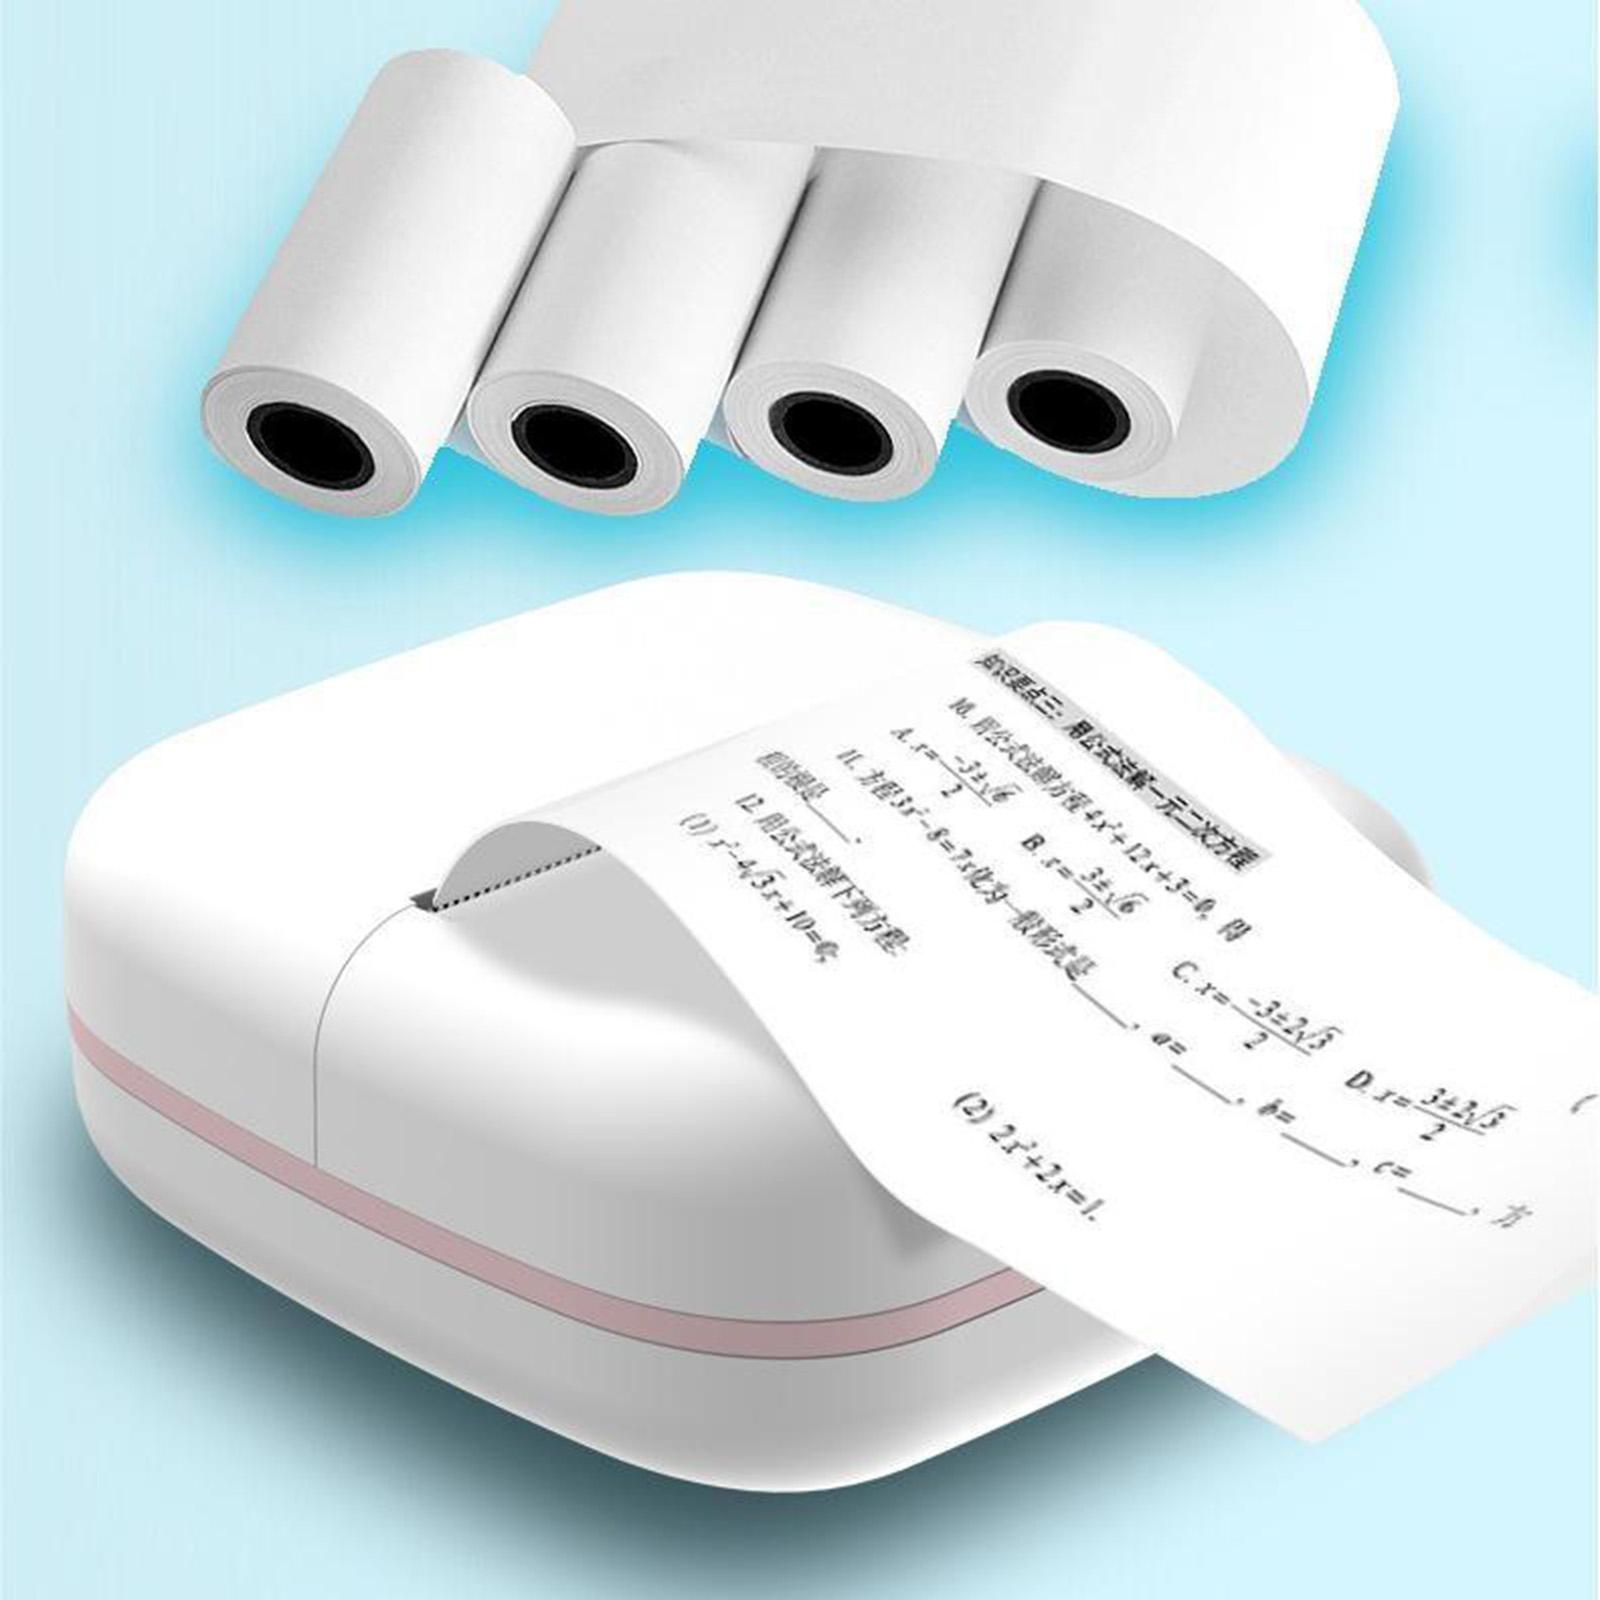 Thermal Photo Printer Mini Bluetooth Pocket Printer Portable Printer, Compatible